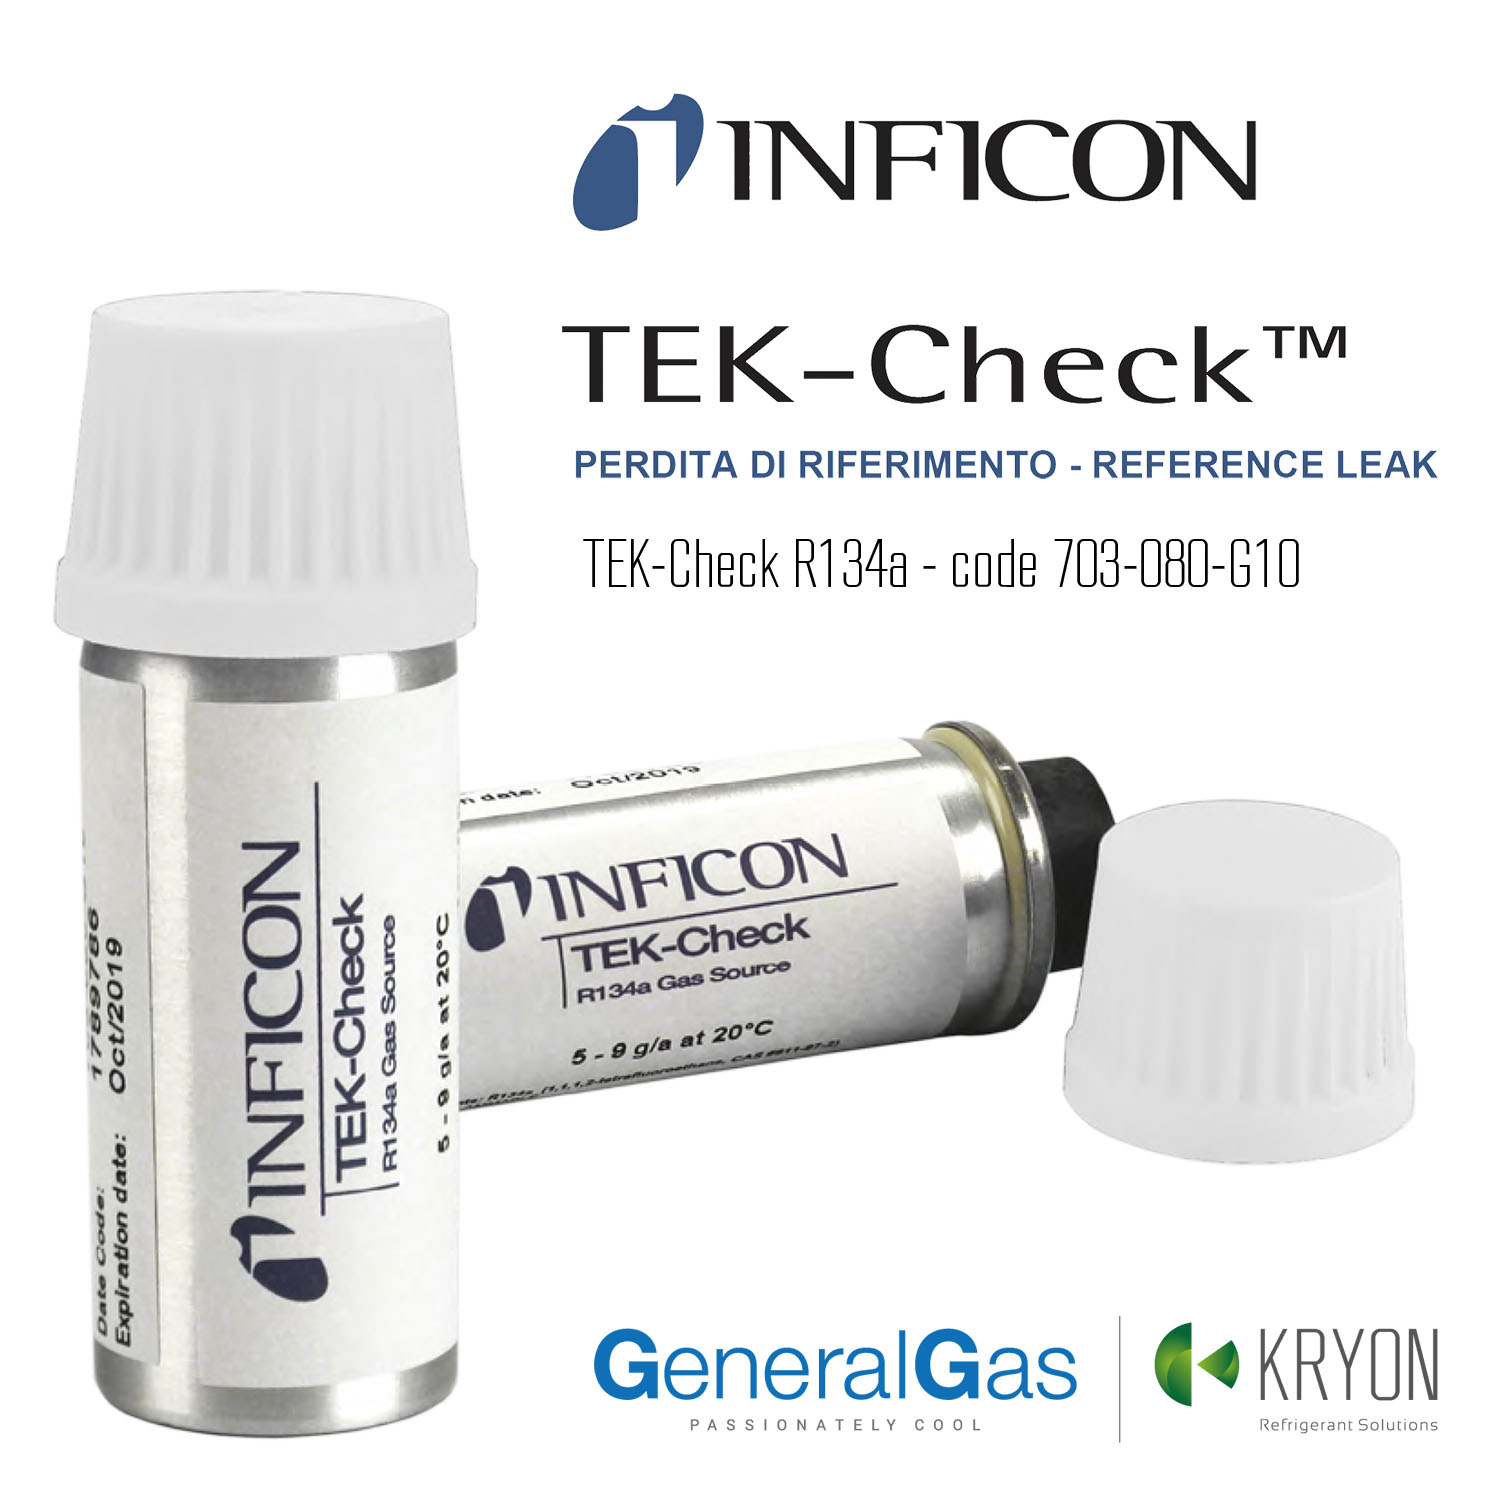 Inficon TEK-Check - reference leak for checking refrigerant leak detectors - leak rate 5 g/yr HFC R134a